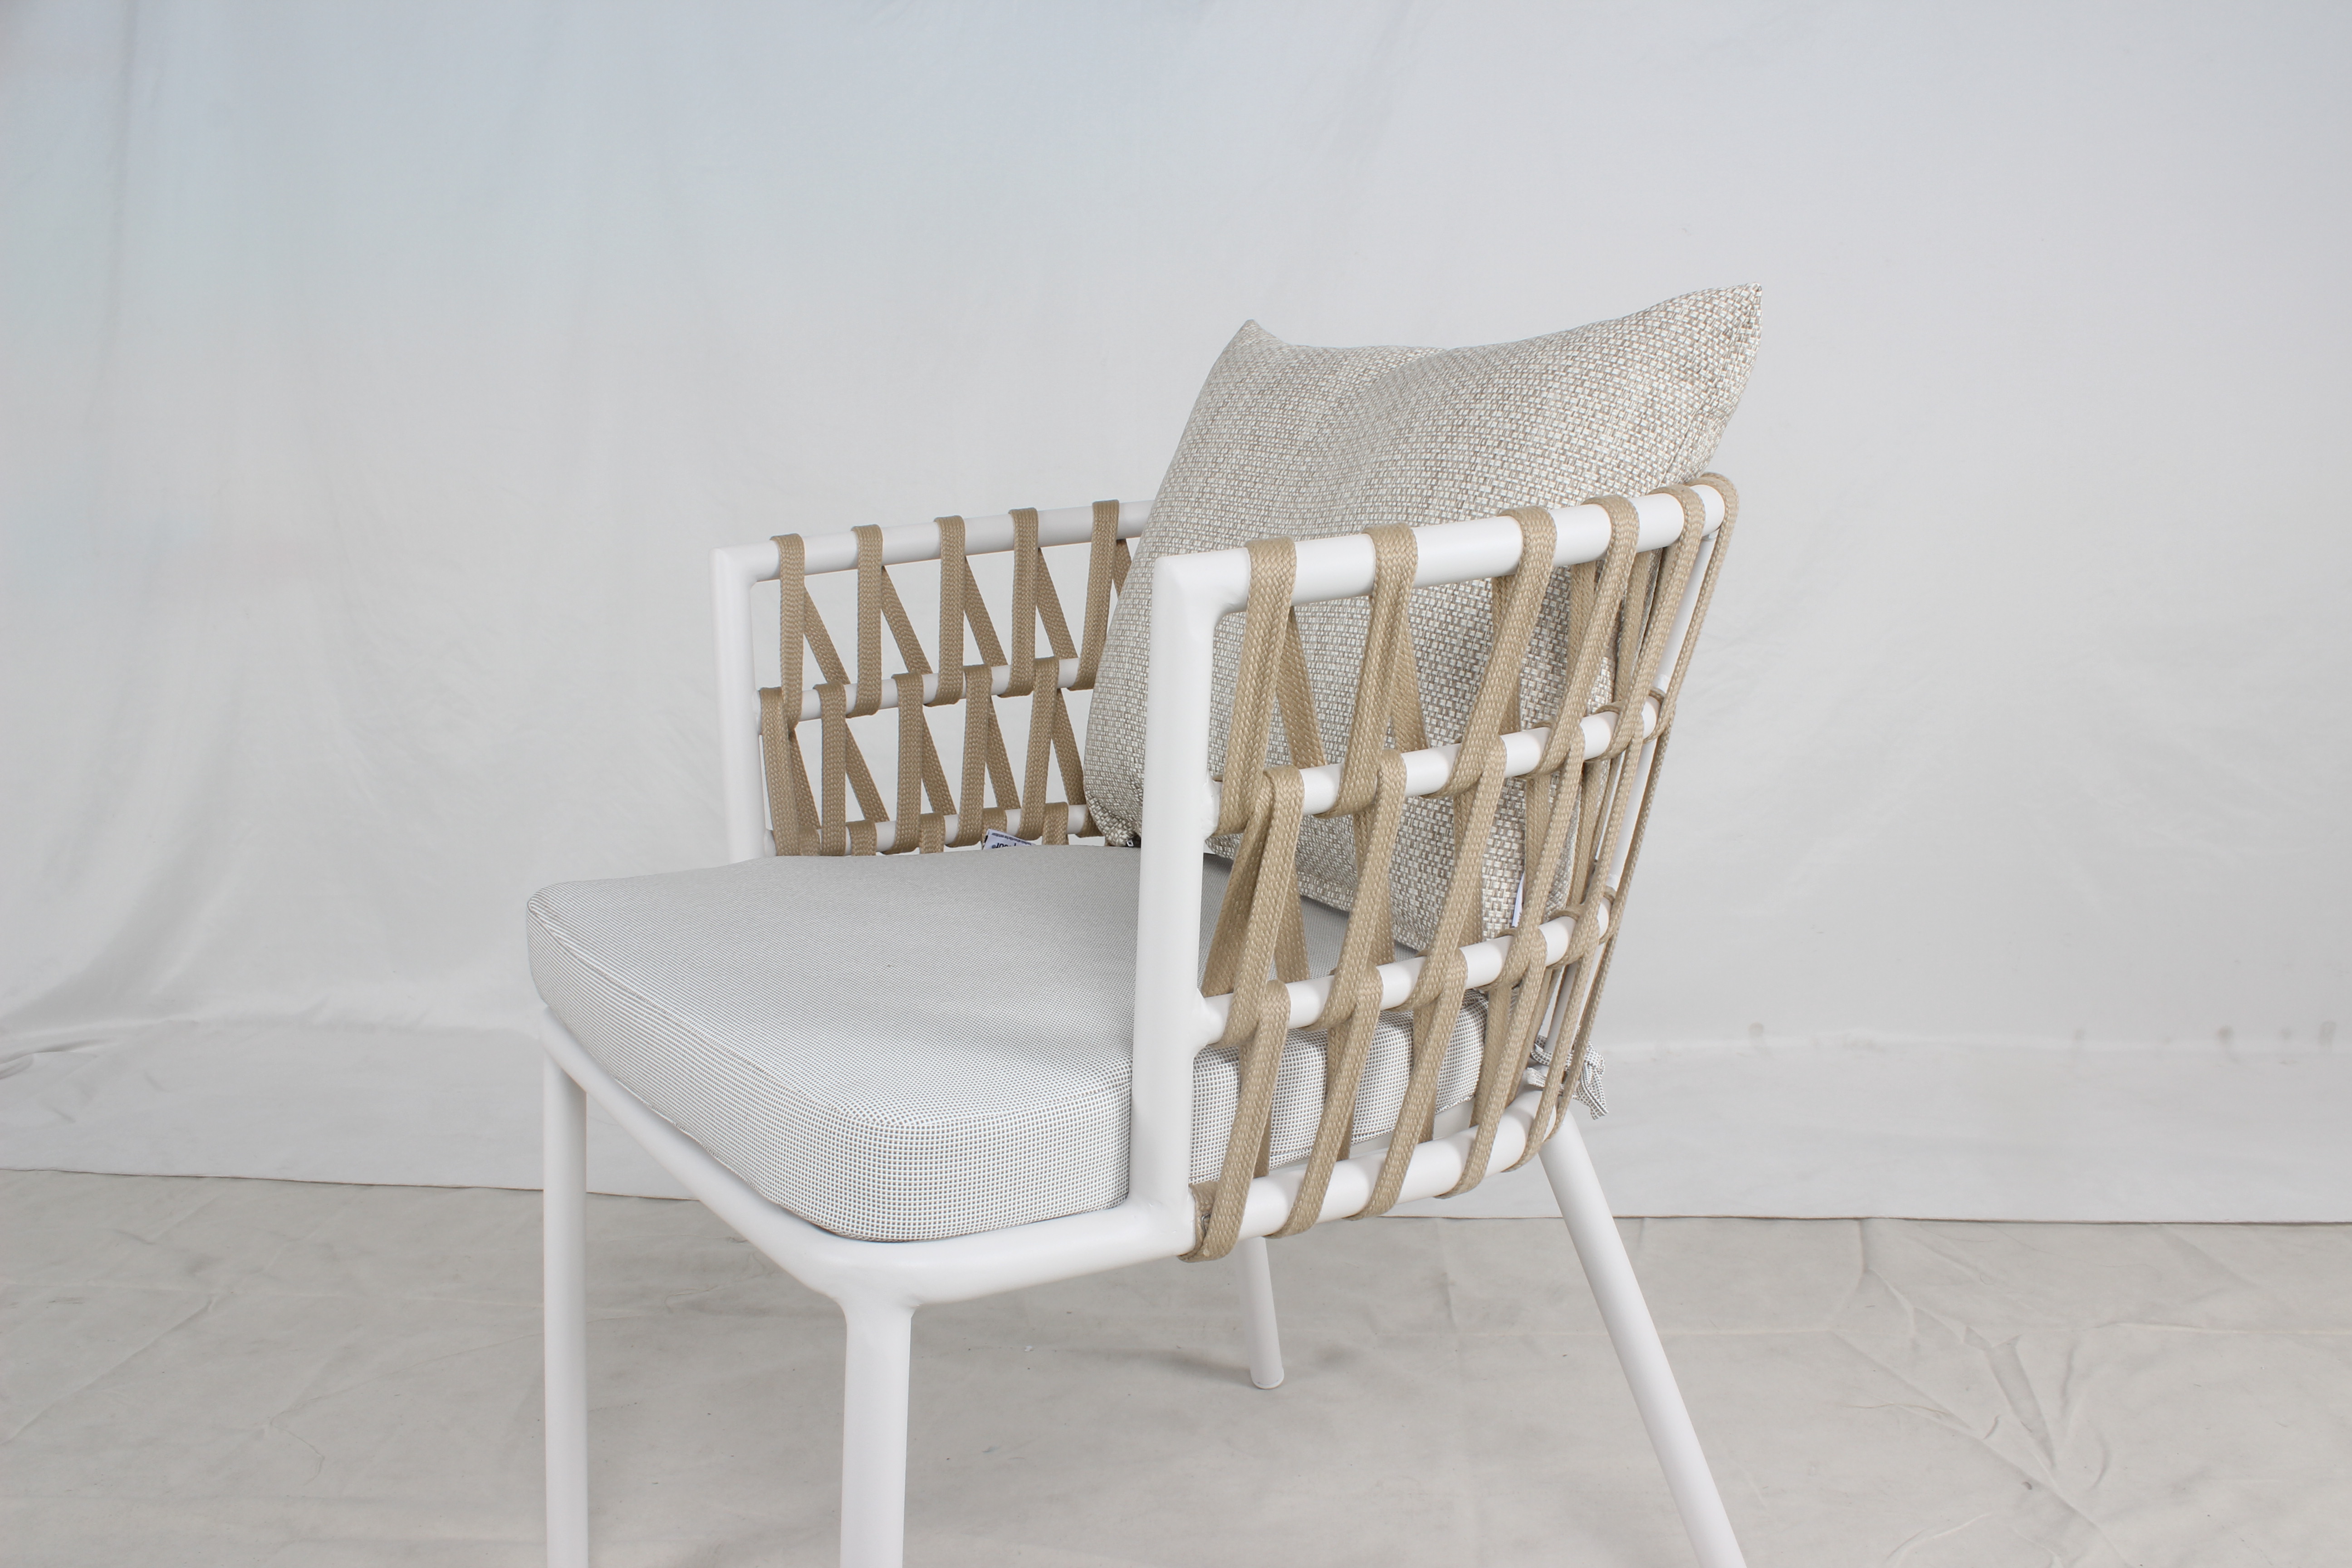 Patio outdoor aluminum arm dining chair